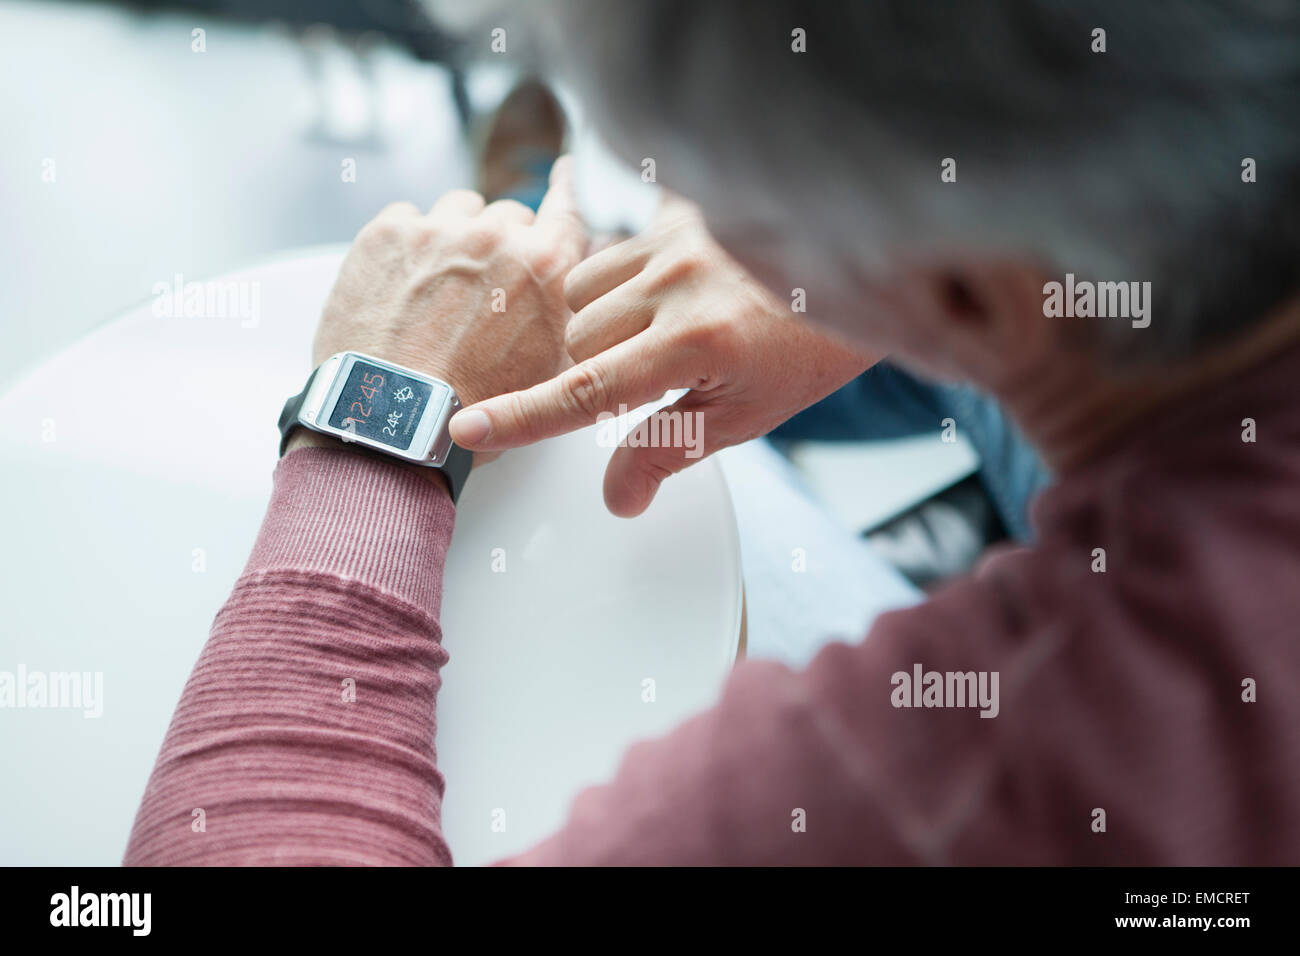 Man adjusting smartwatch Stock Photo